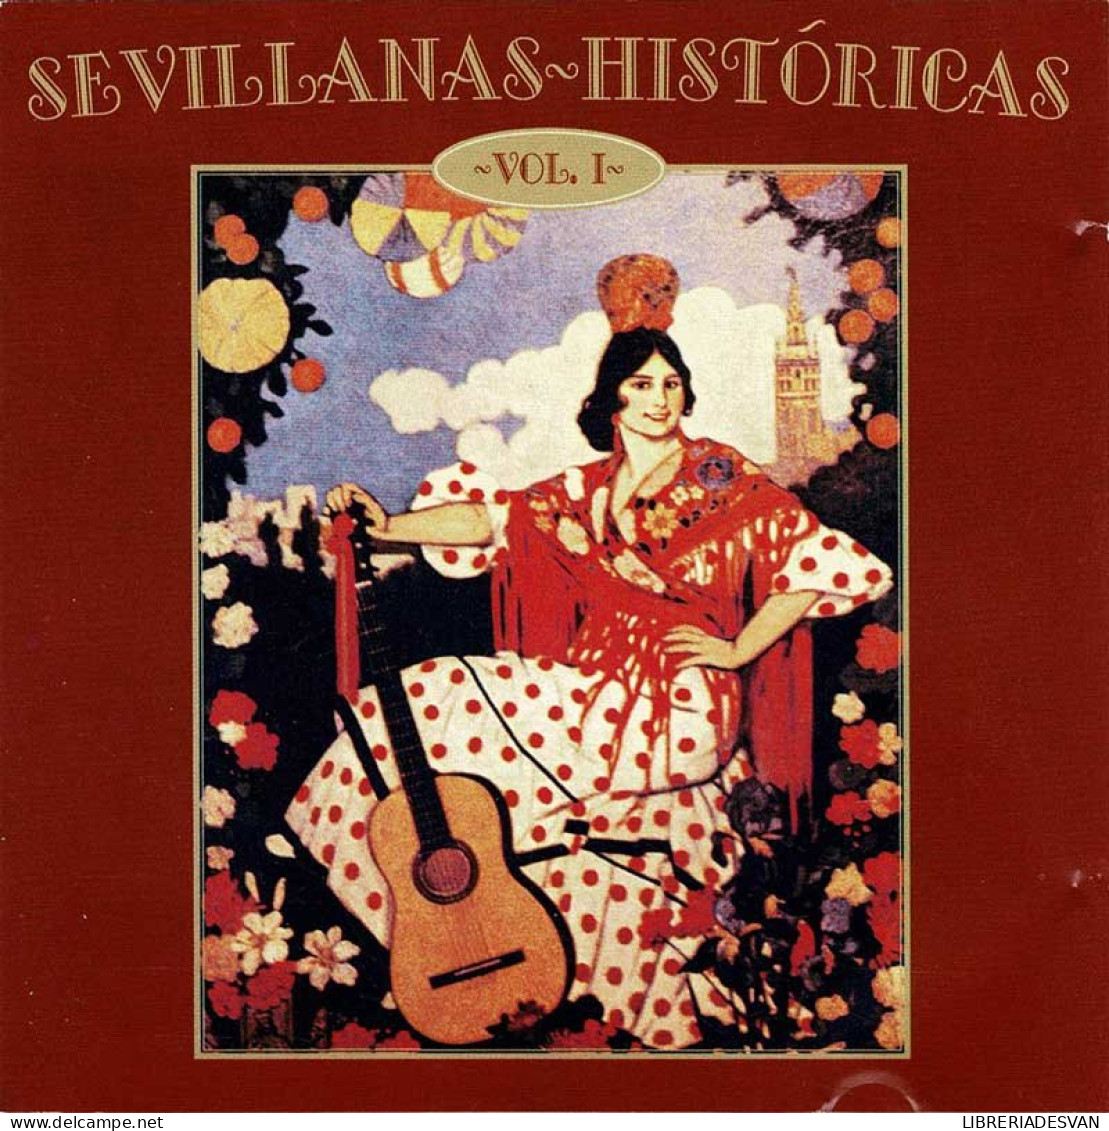 Sevillanas Históricas, Vol. 1. CD - Altri - Musica Spagnola